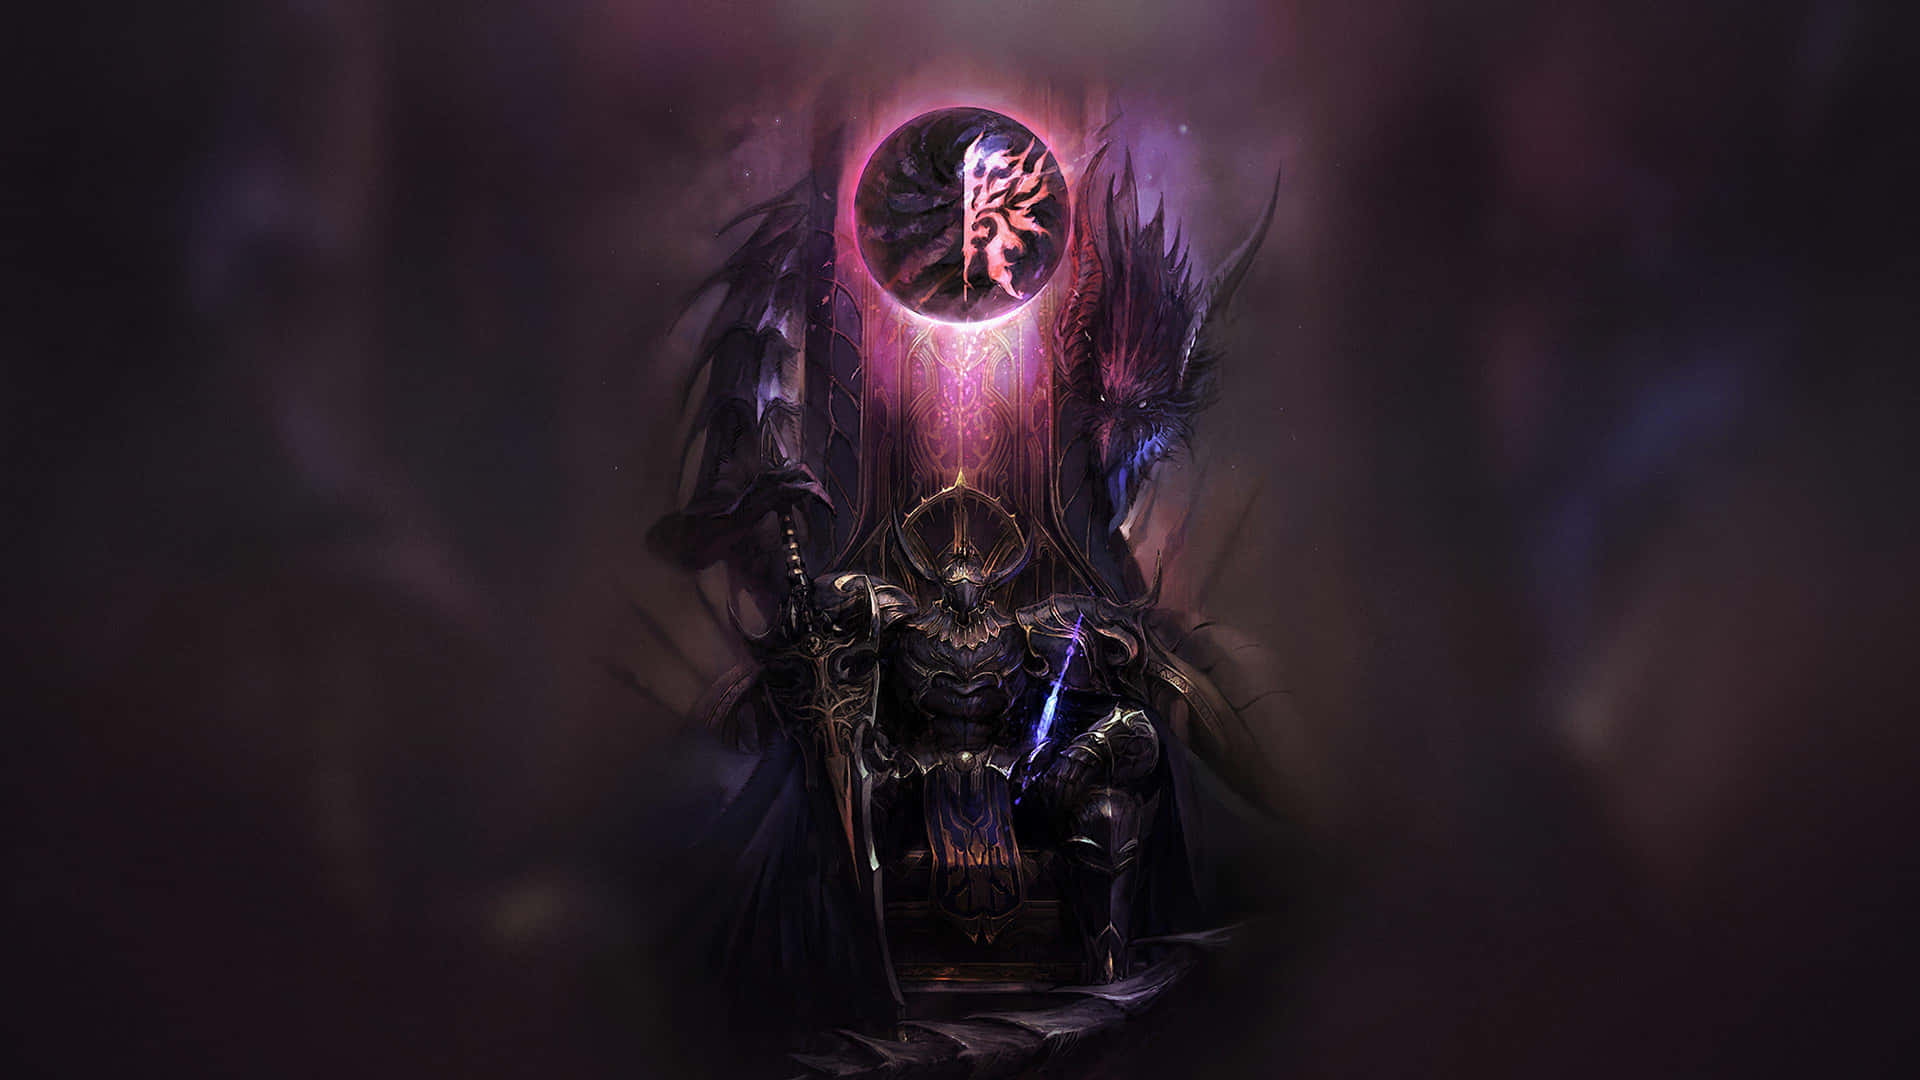 Caption: Fiery Warlock Warrior In The Mystical World Of Warcraft Wallpaper